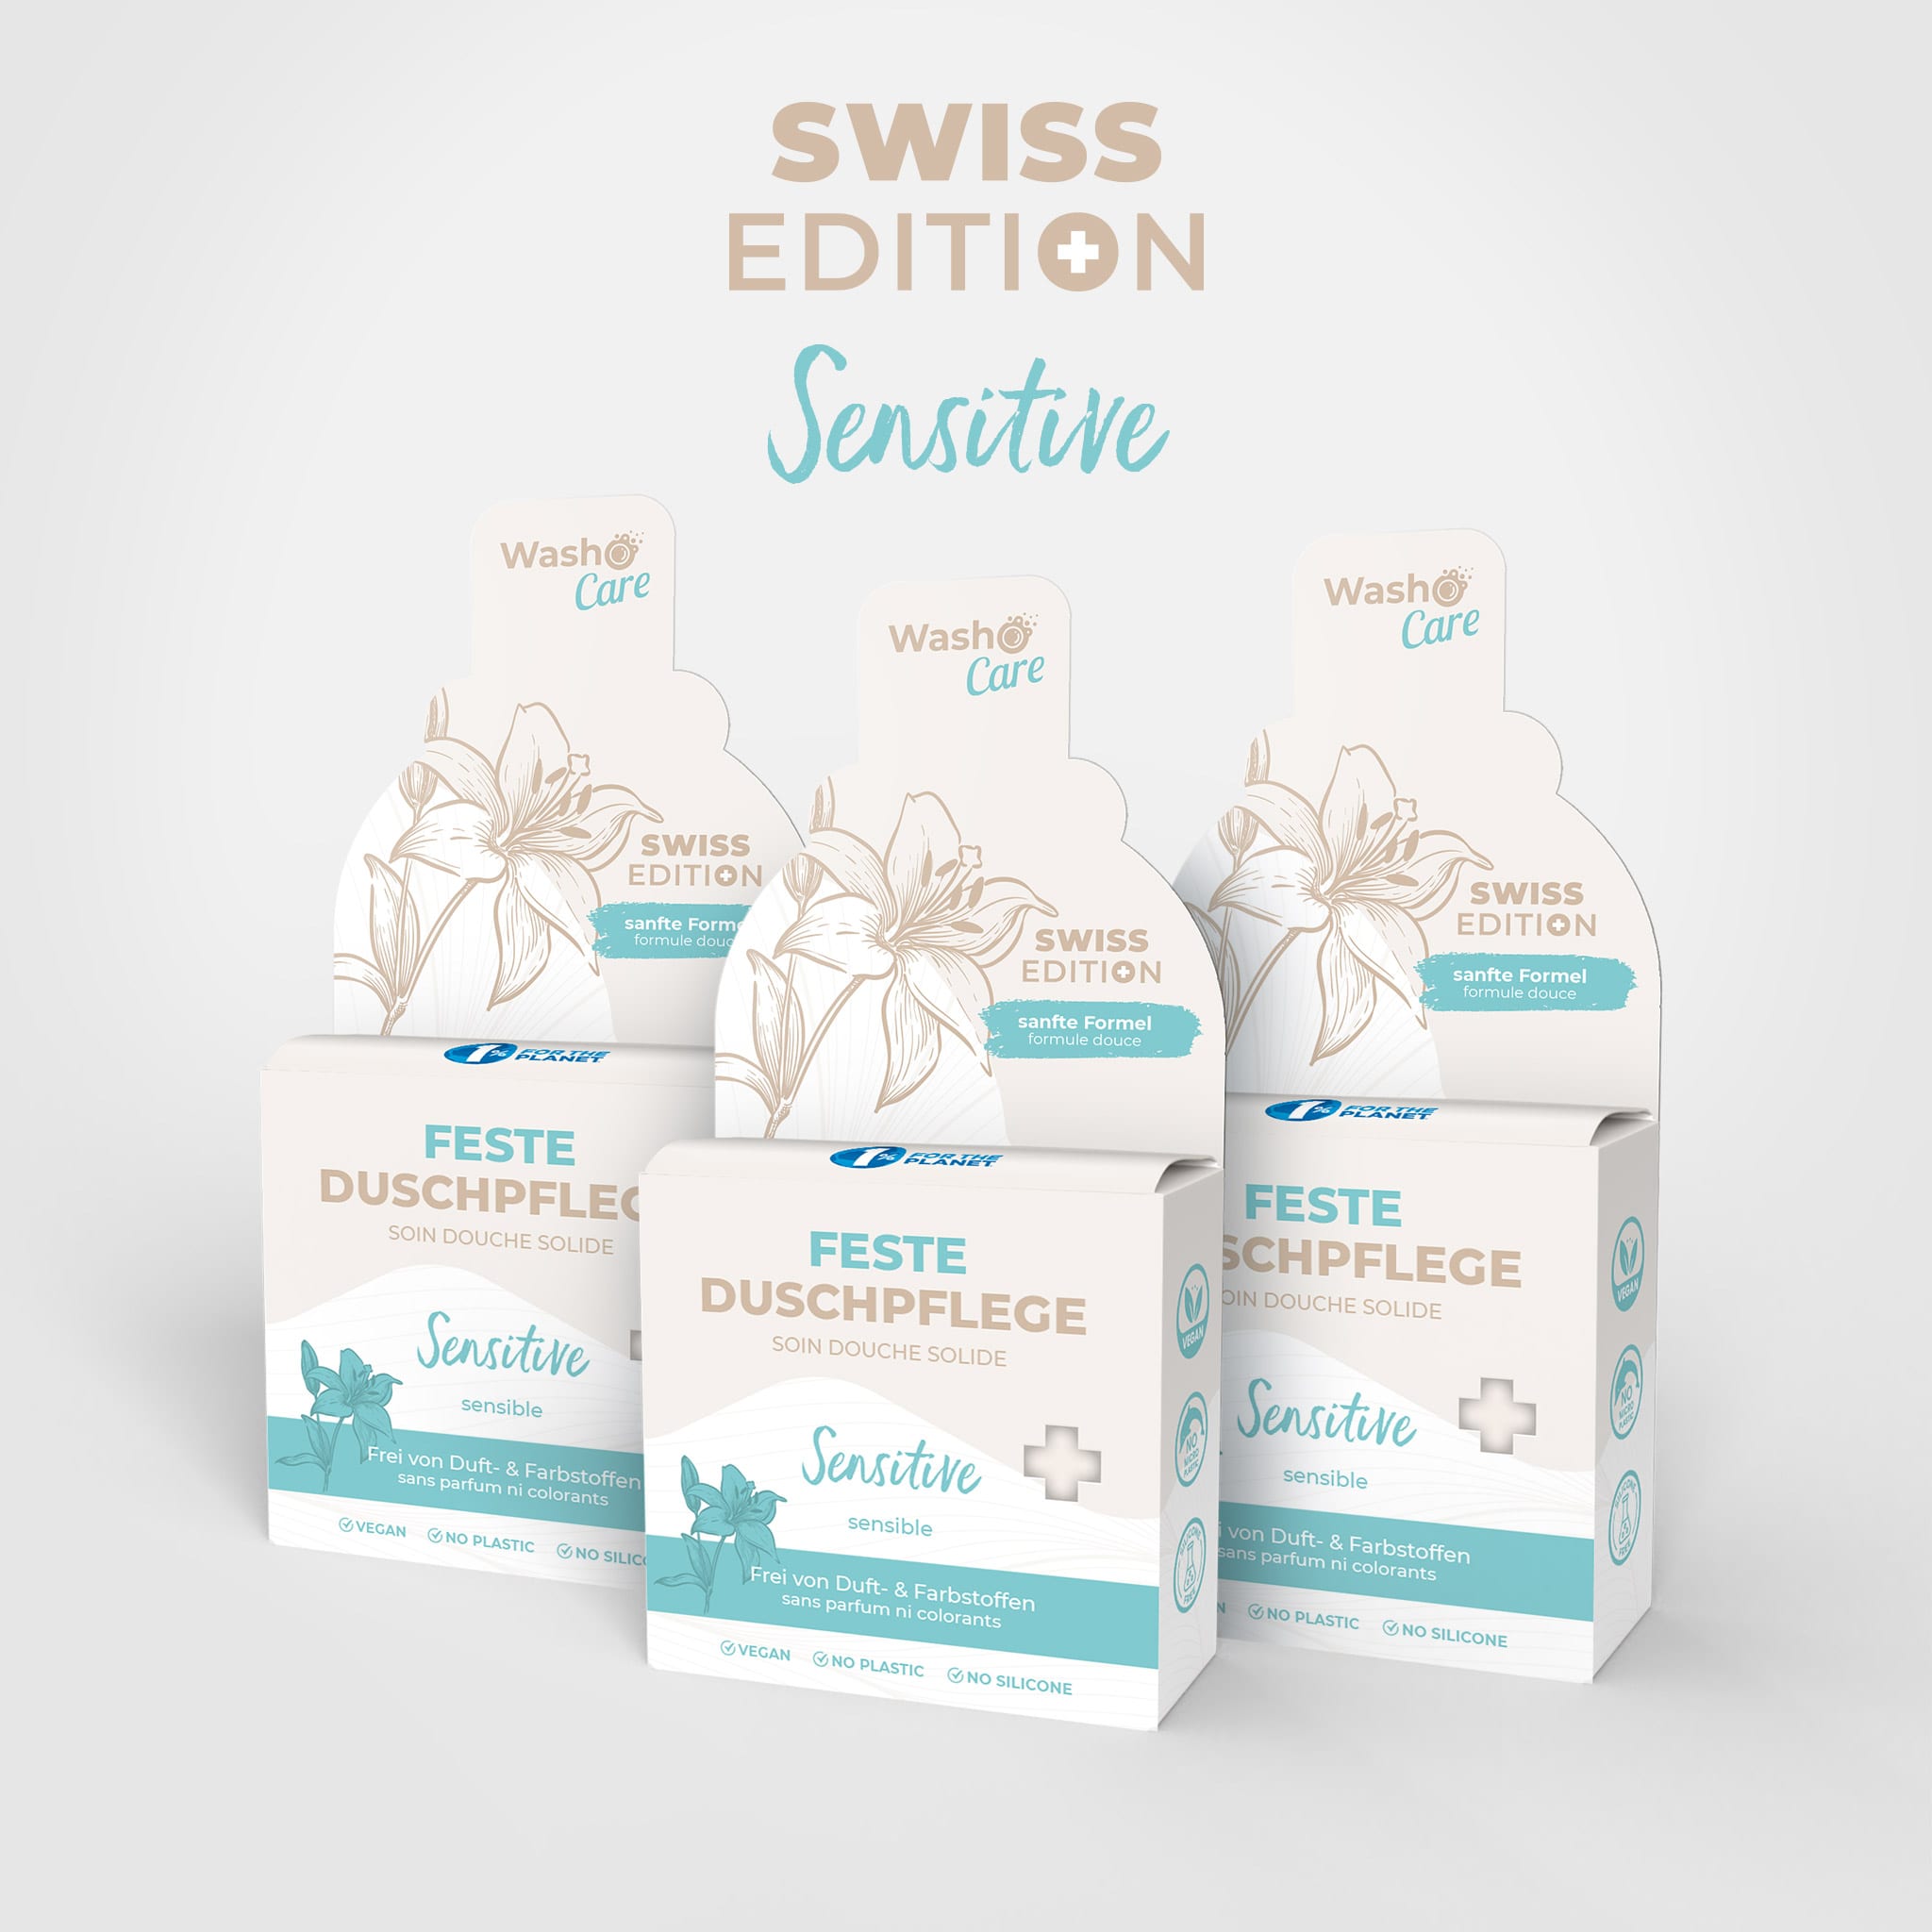 3 Washo Care Swiss Edition Feste Duschpflege Sensitive